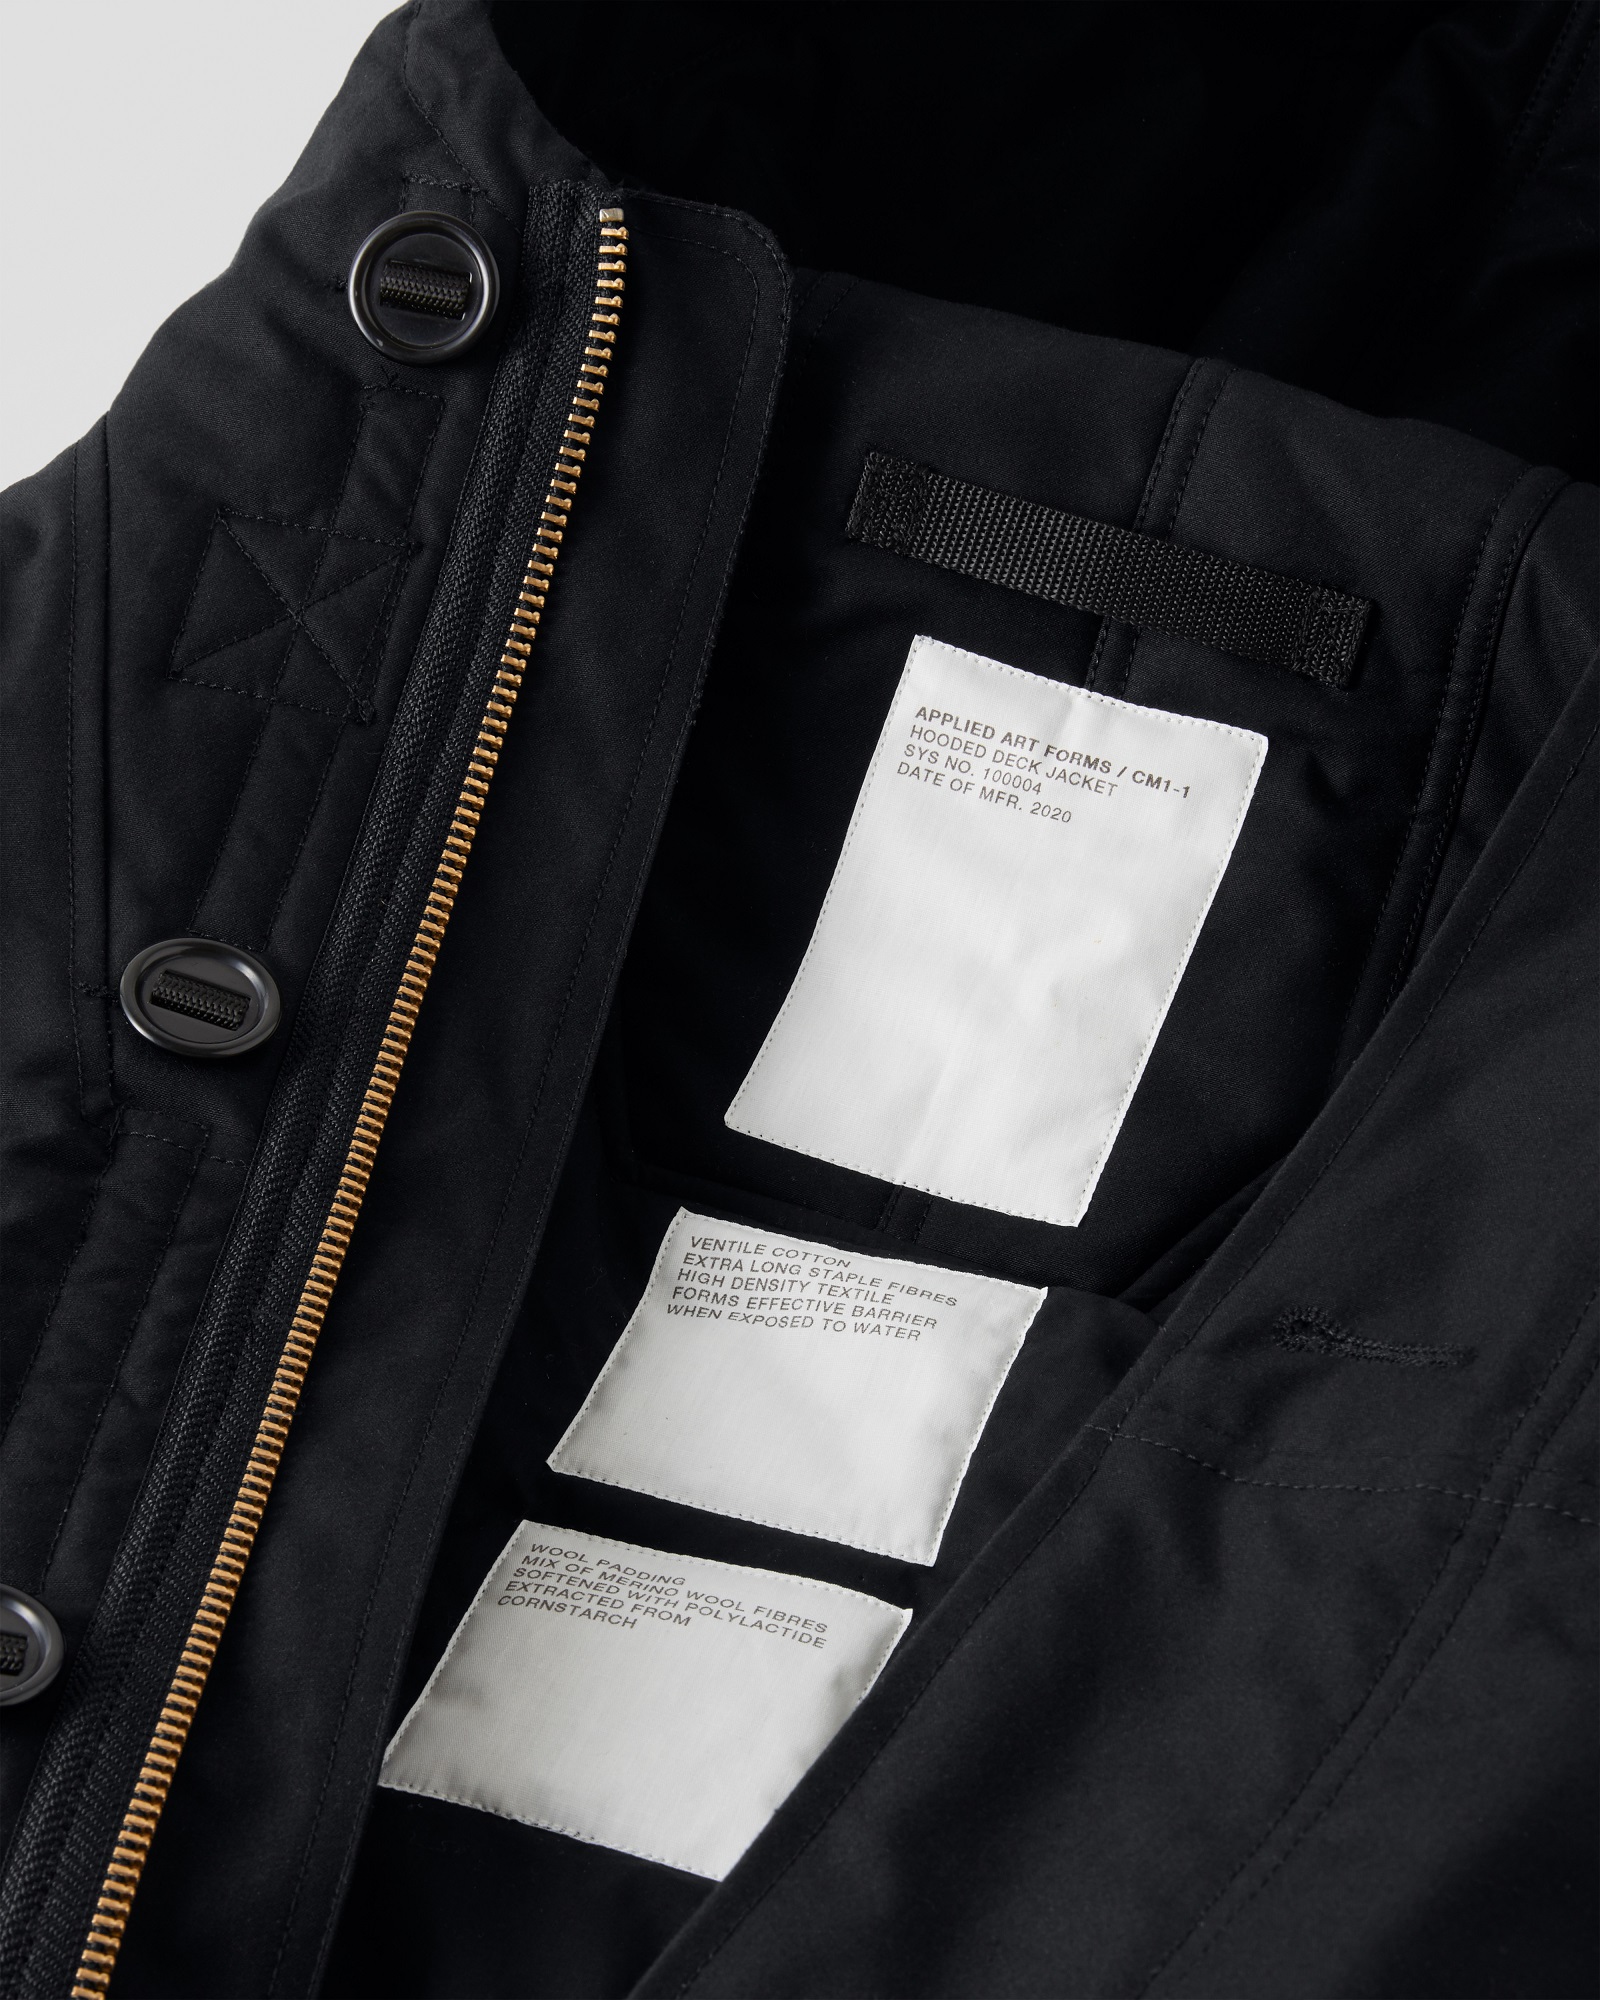 APPLIED ART FORMS Hooded Deck Jacket in Black S